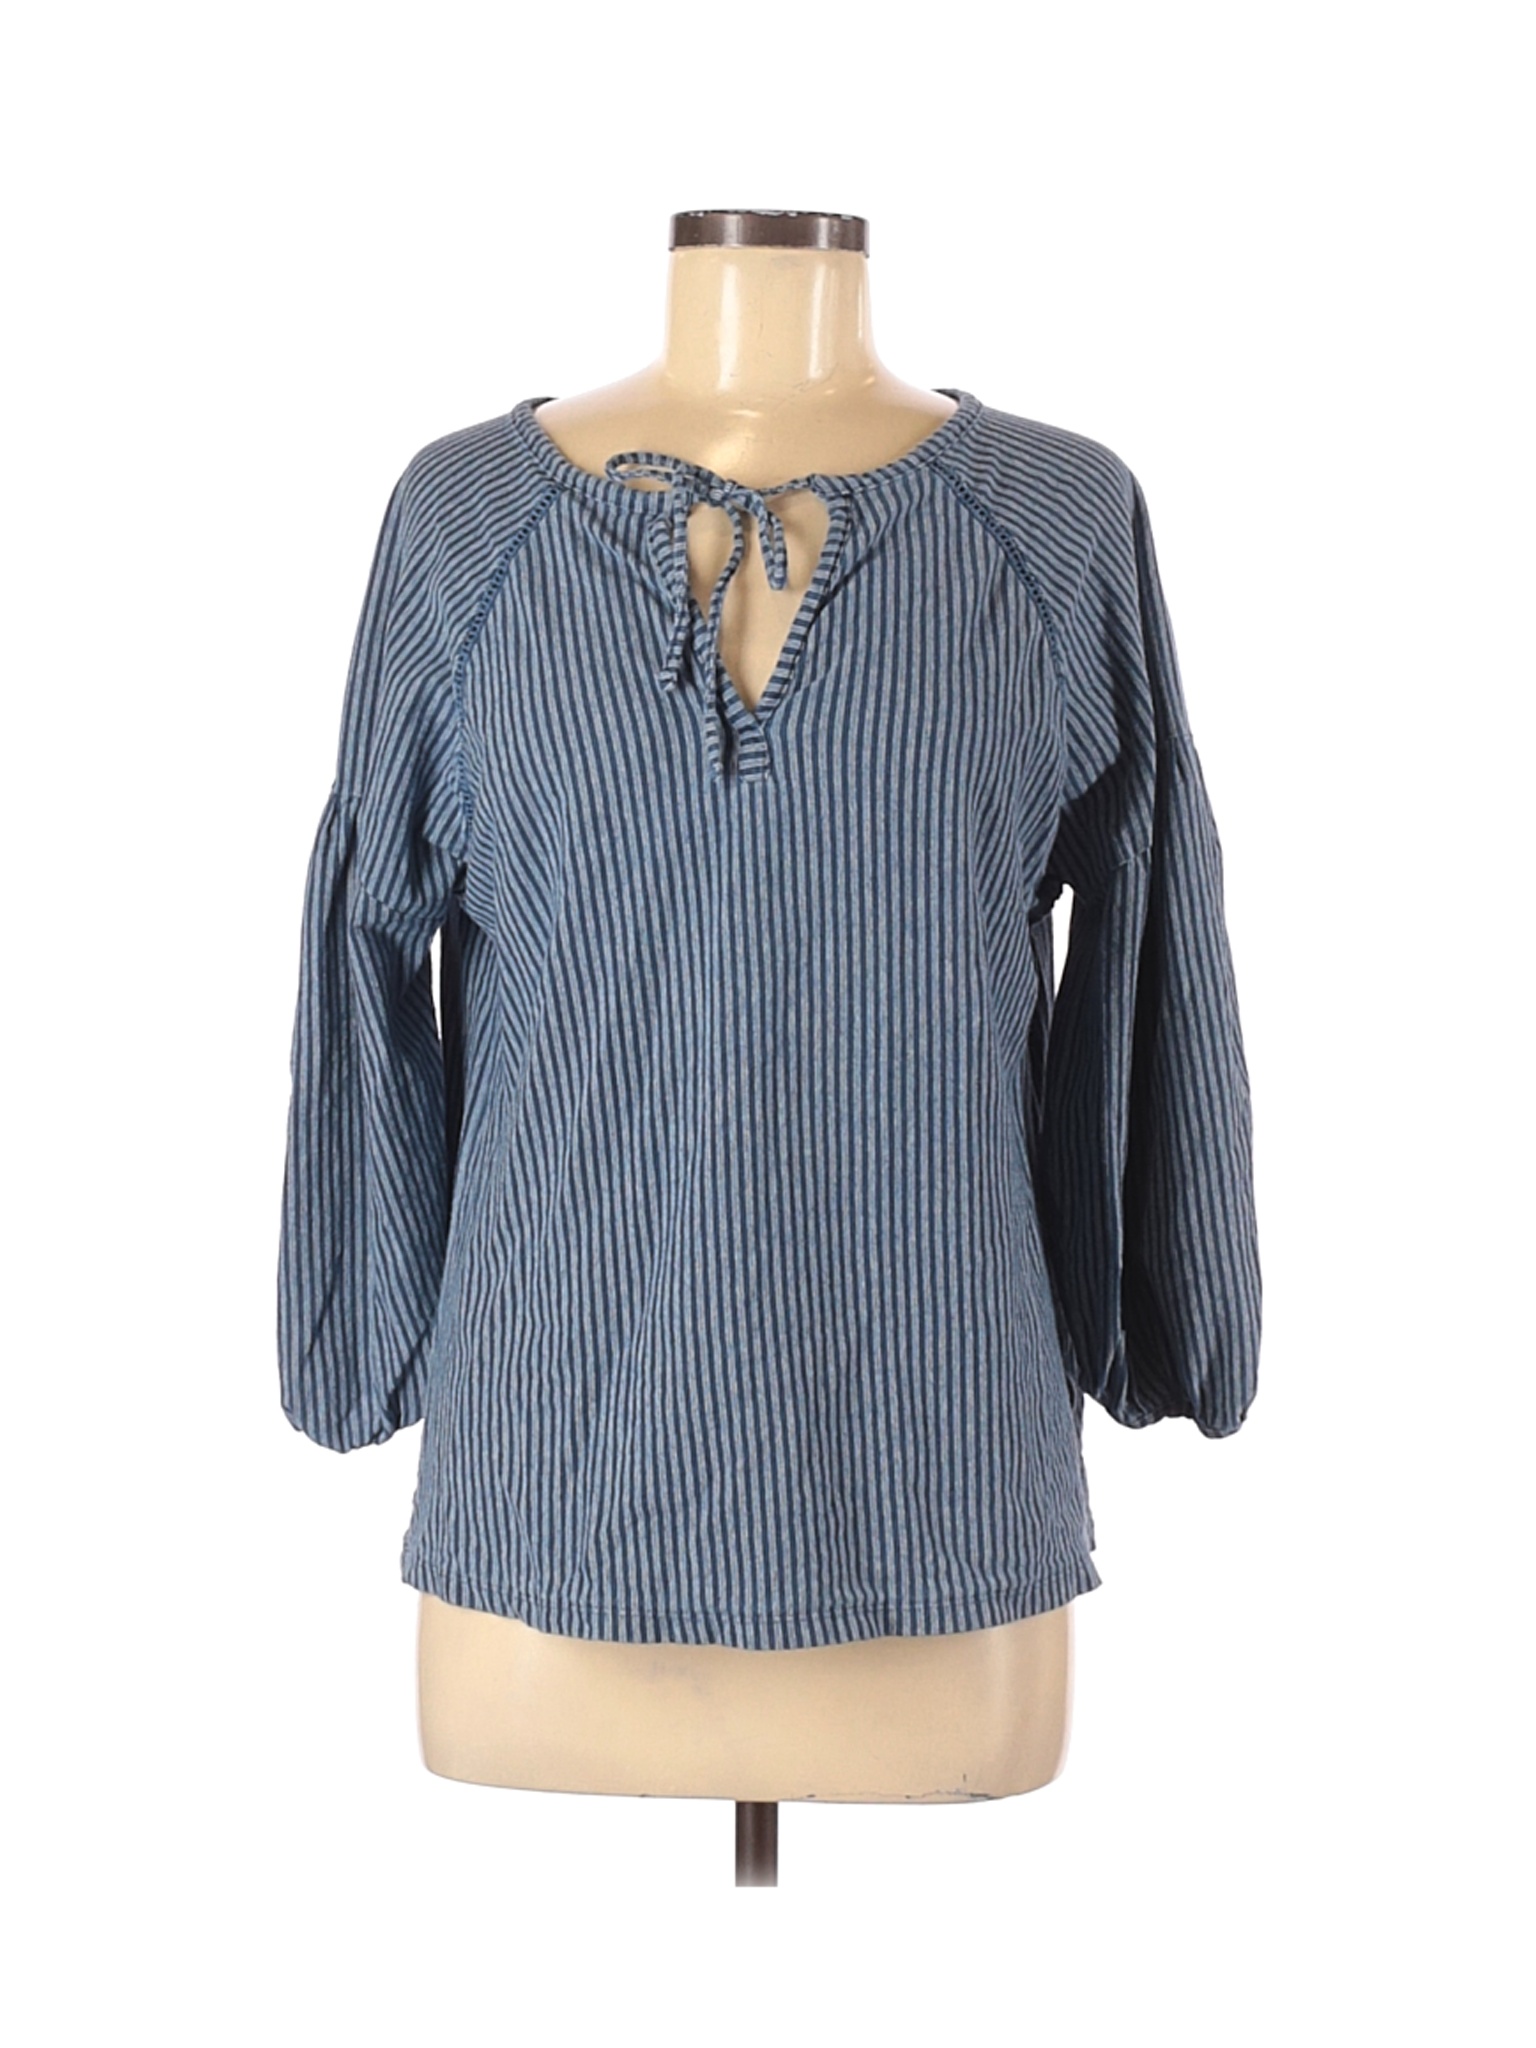 Universal Thread Women Blue Long Sleeve T-Shirt M | eBay